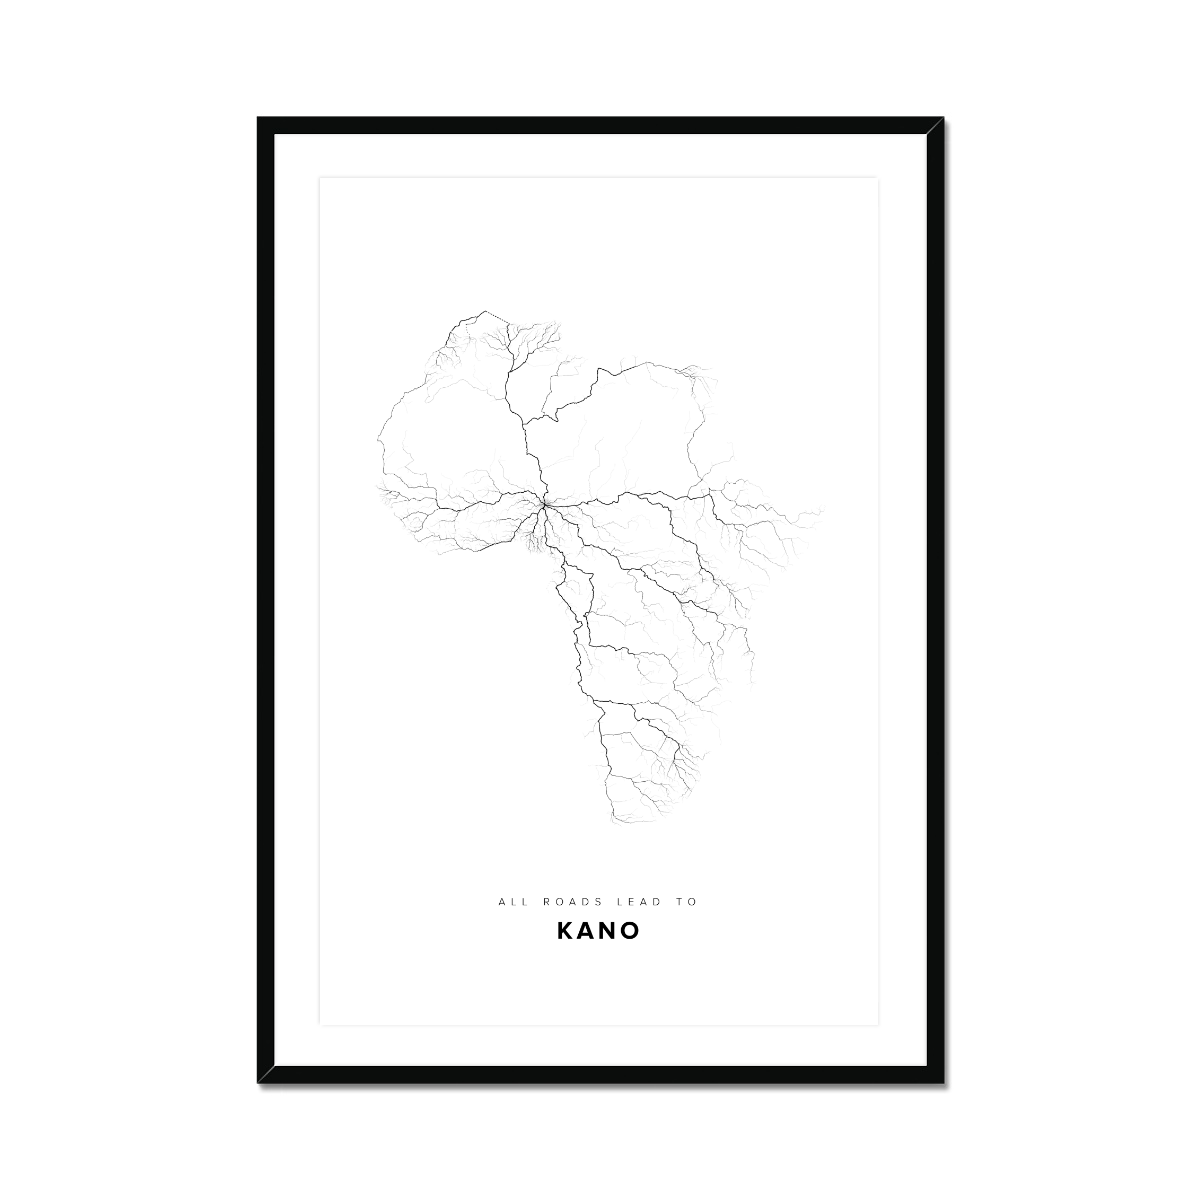 All roads lead to Kano (Nigeria) Fine Art Map Print